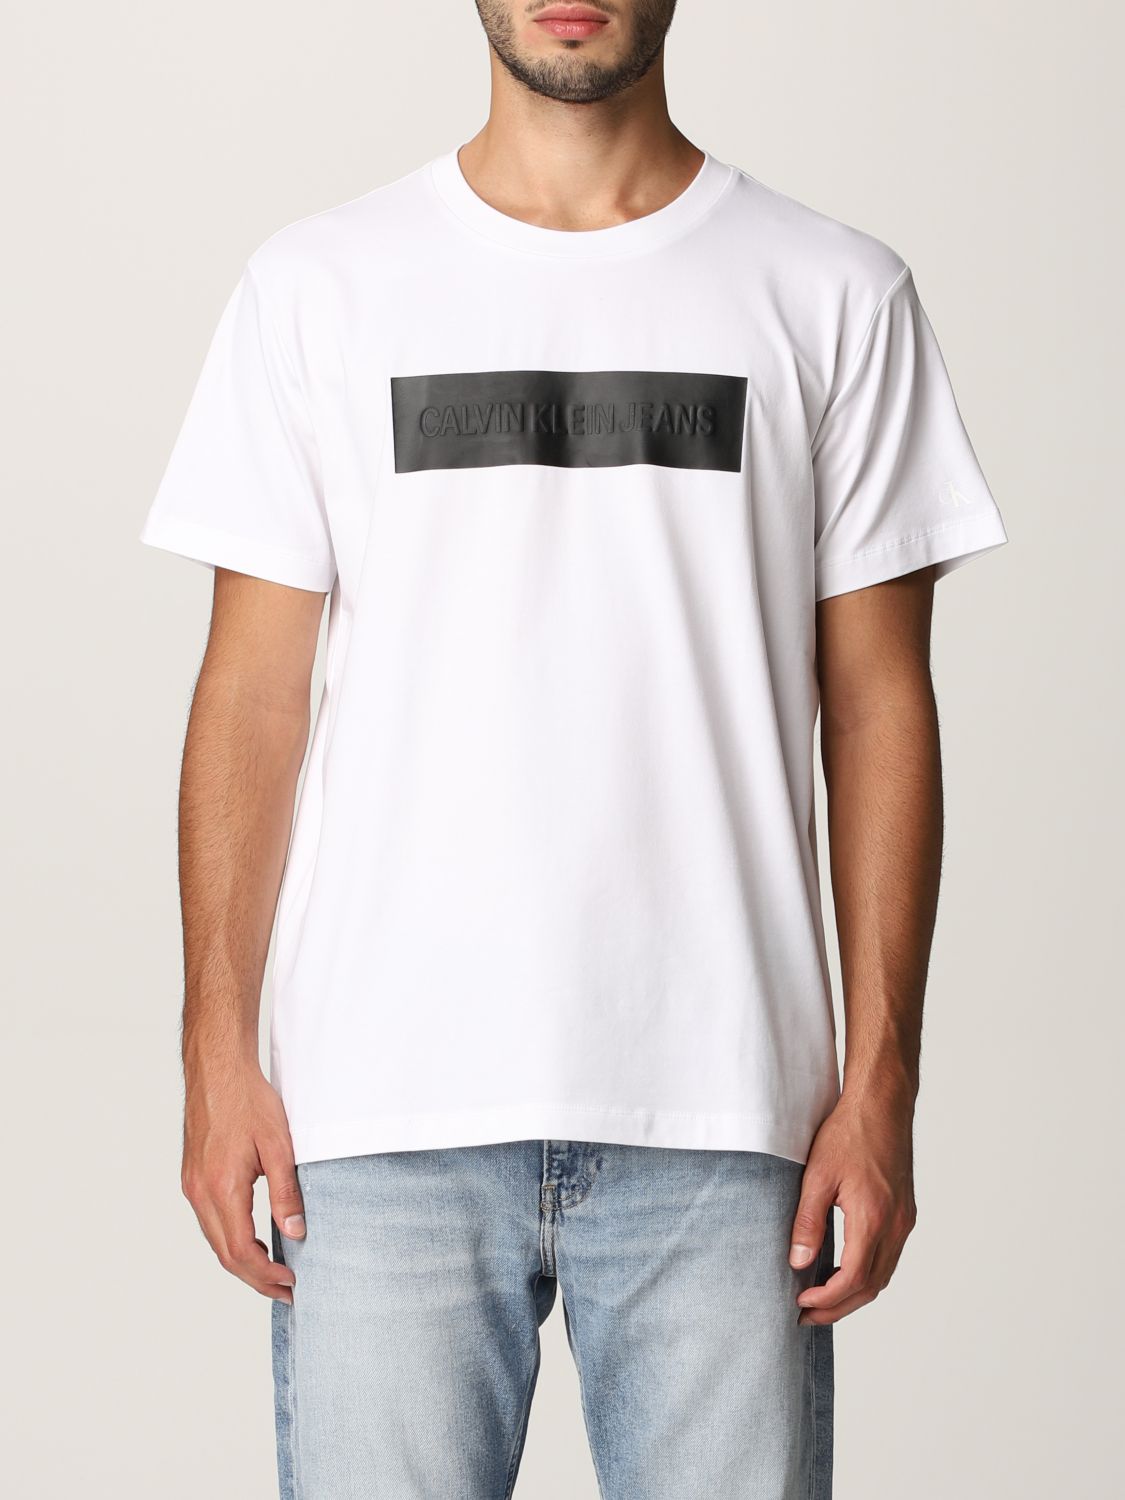 CALVIN KLEIN JEANS: t-shirt for Klein White | J30J318453 at - online Calvin man t-shirt Jeans